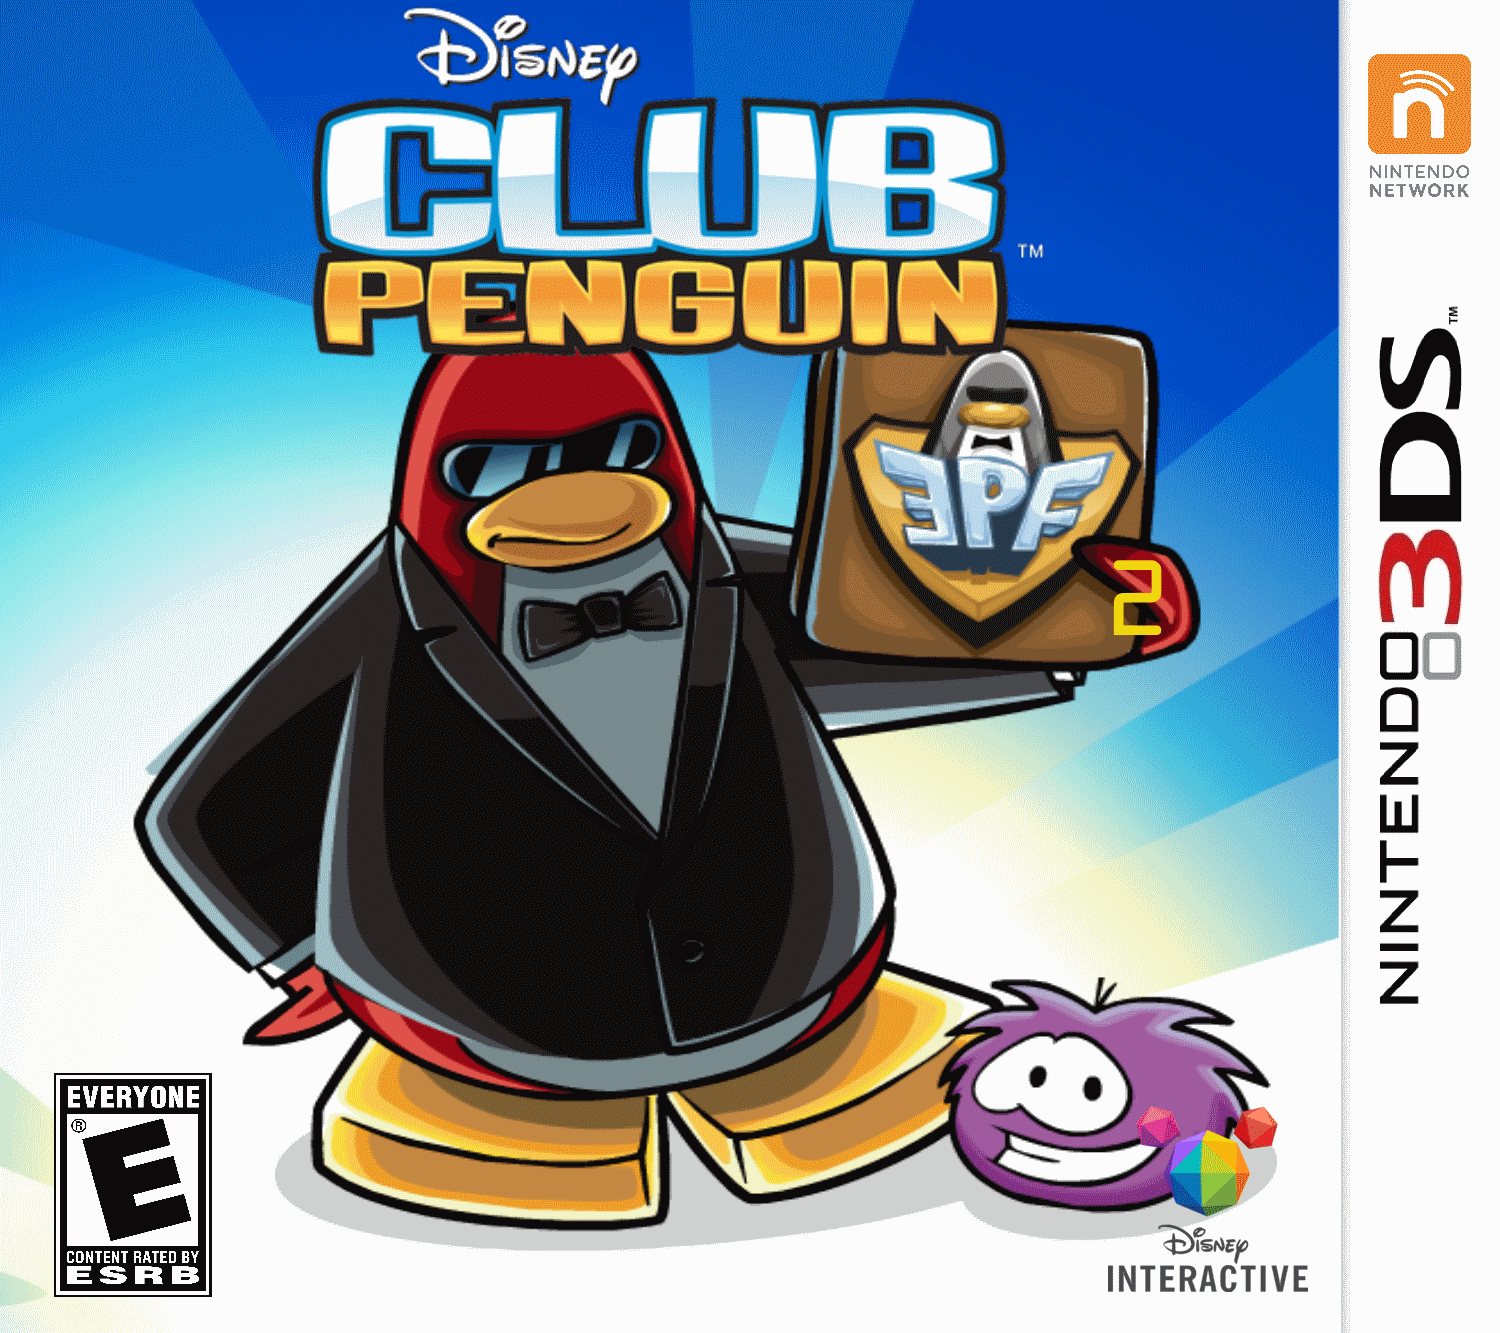 Club Penguin: Elite Penguin Force - Wikipedia